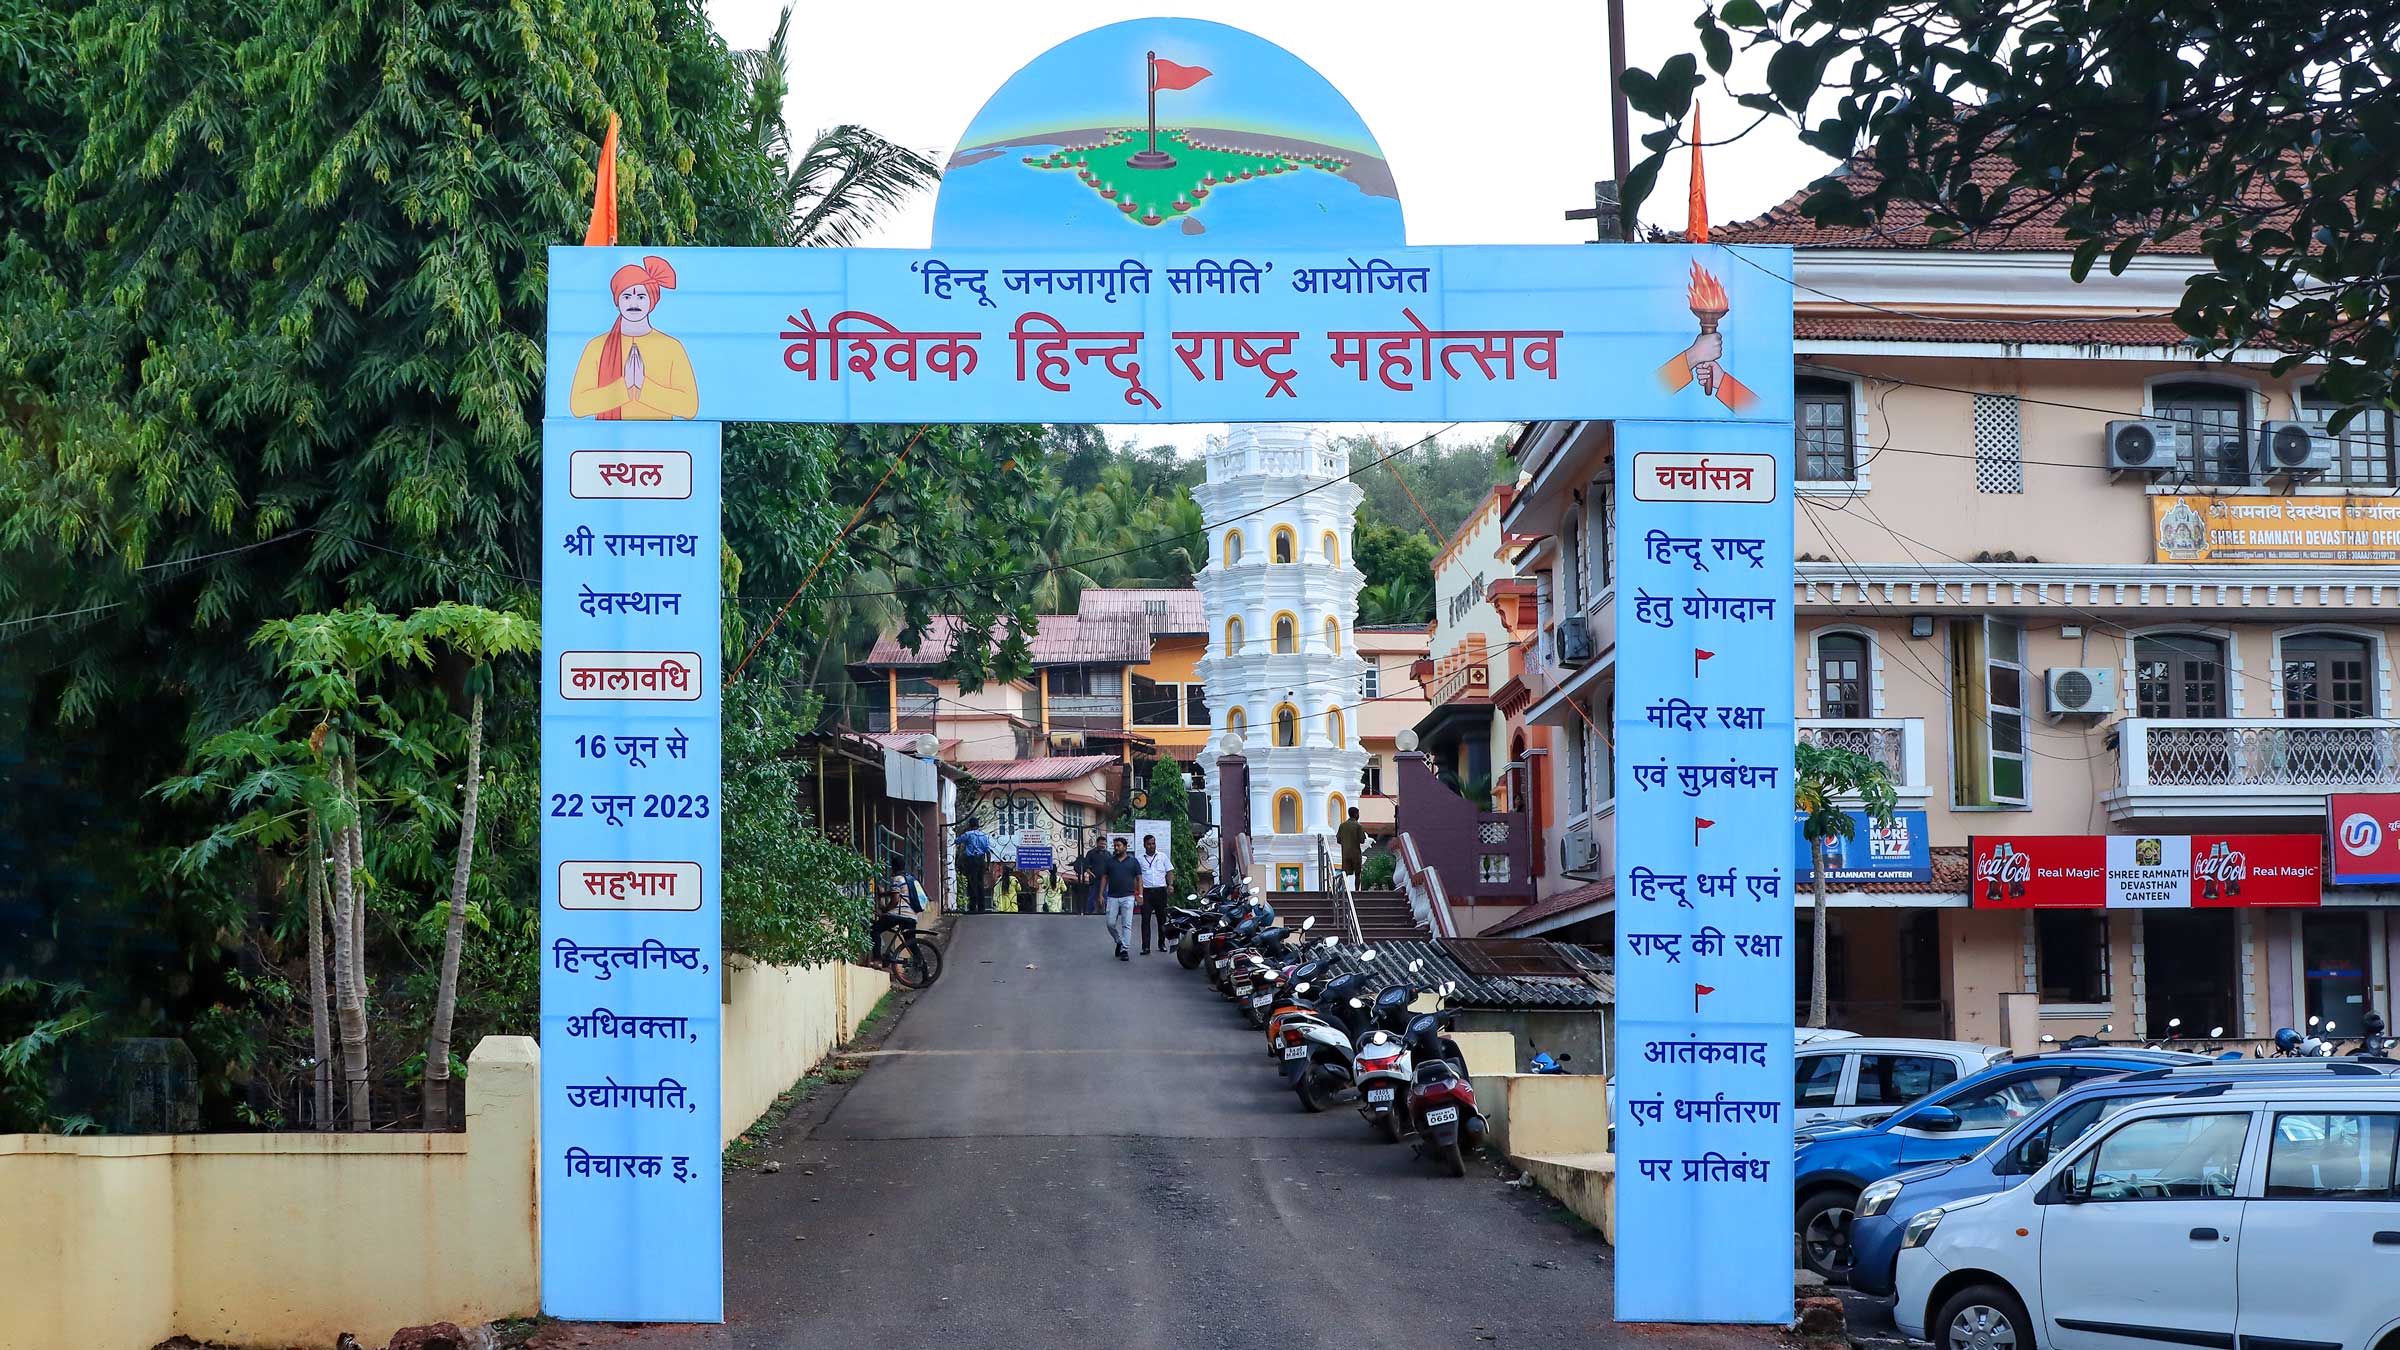 A Welcome gate errected in Shri Ramnath Temple premises on the occasion of Vaishvik Hindu Rashtra Mahotsav